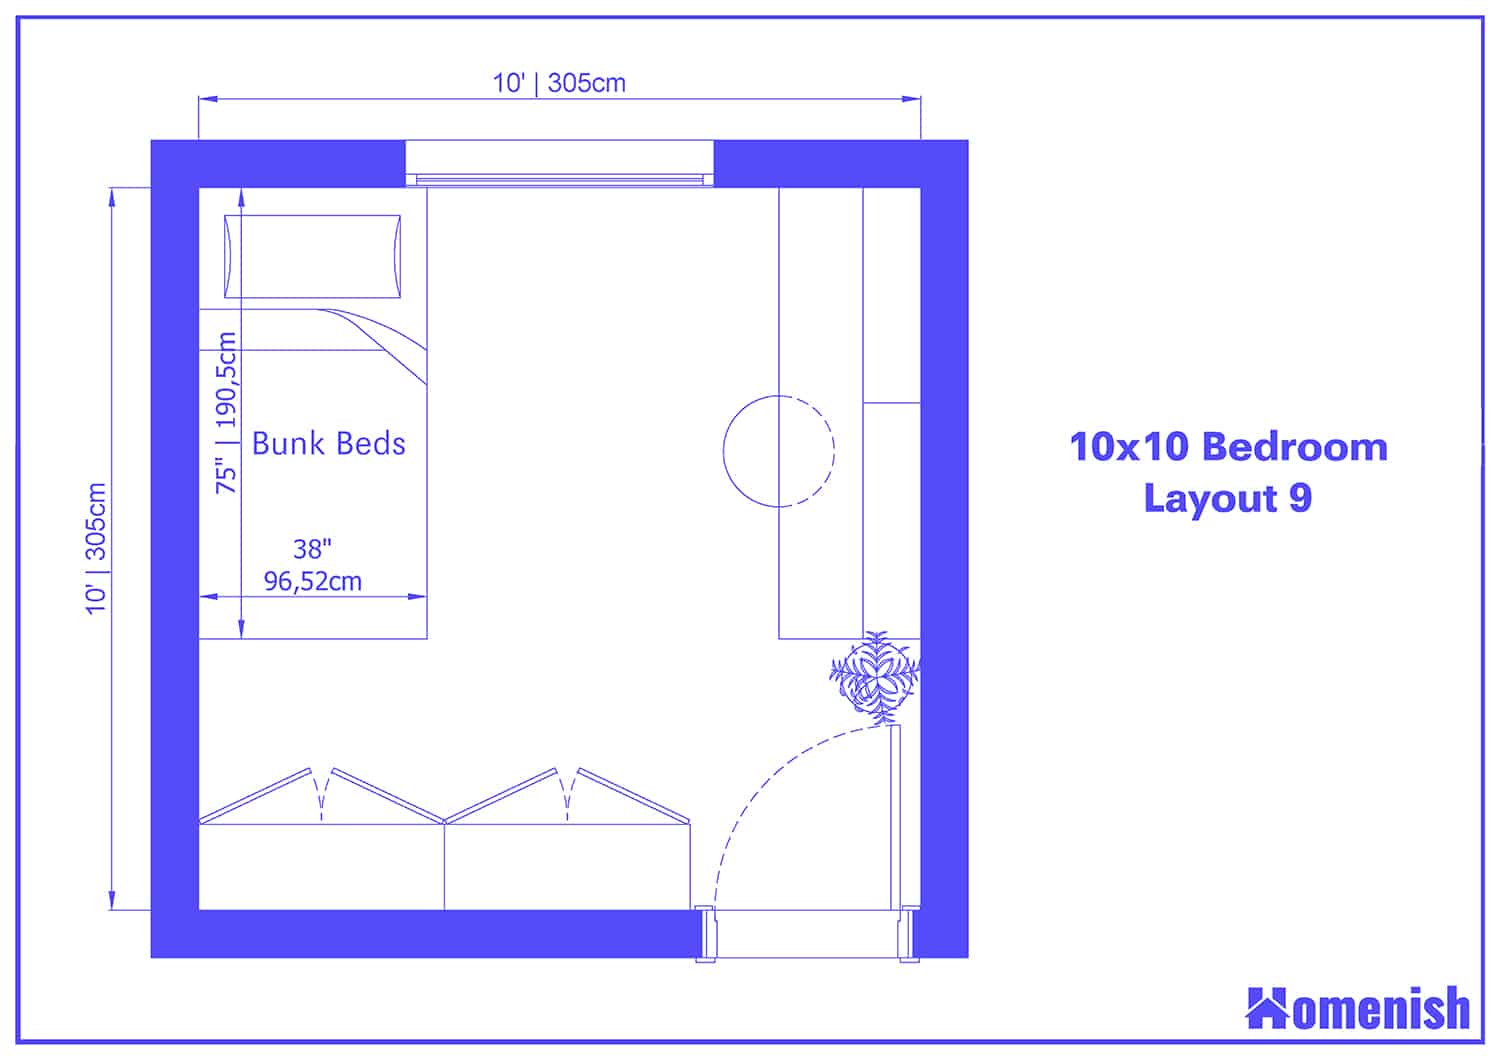 10x10 Bedroom Layout 9